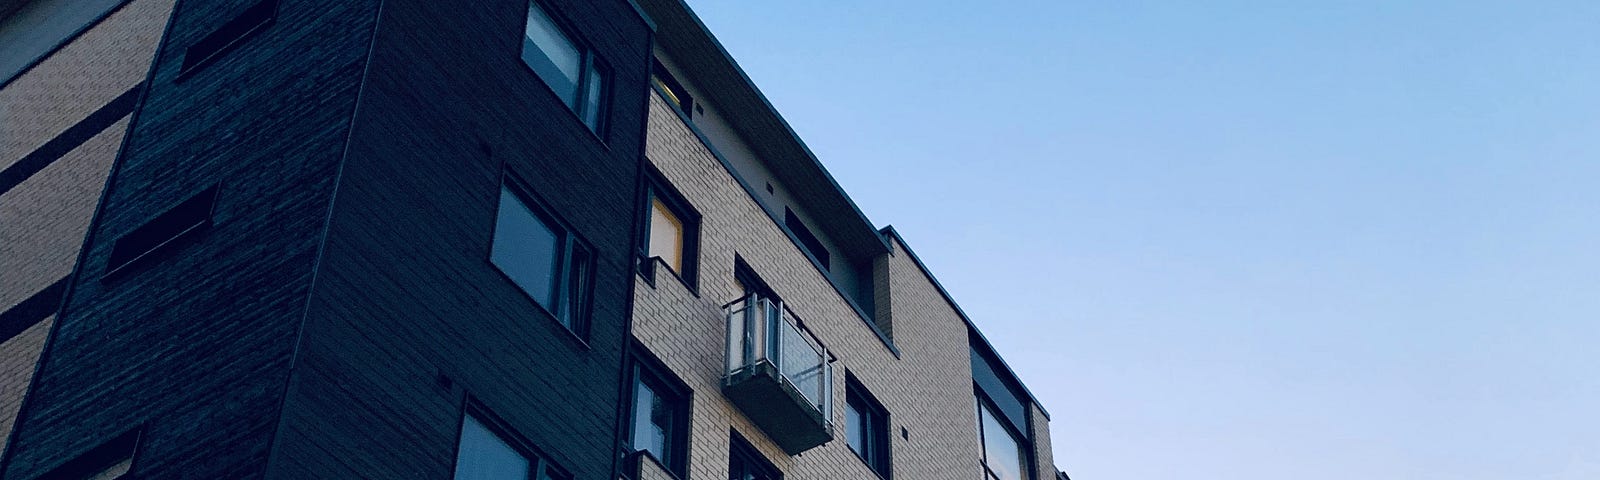 Grey apartment building against blue sky.